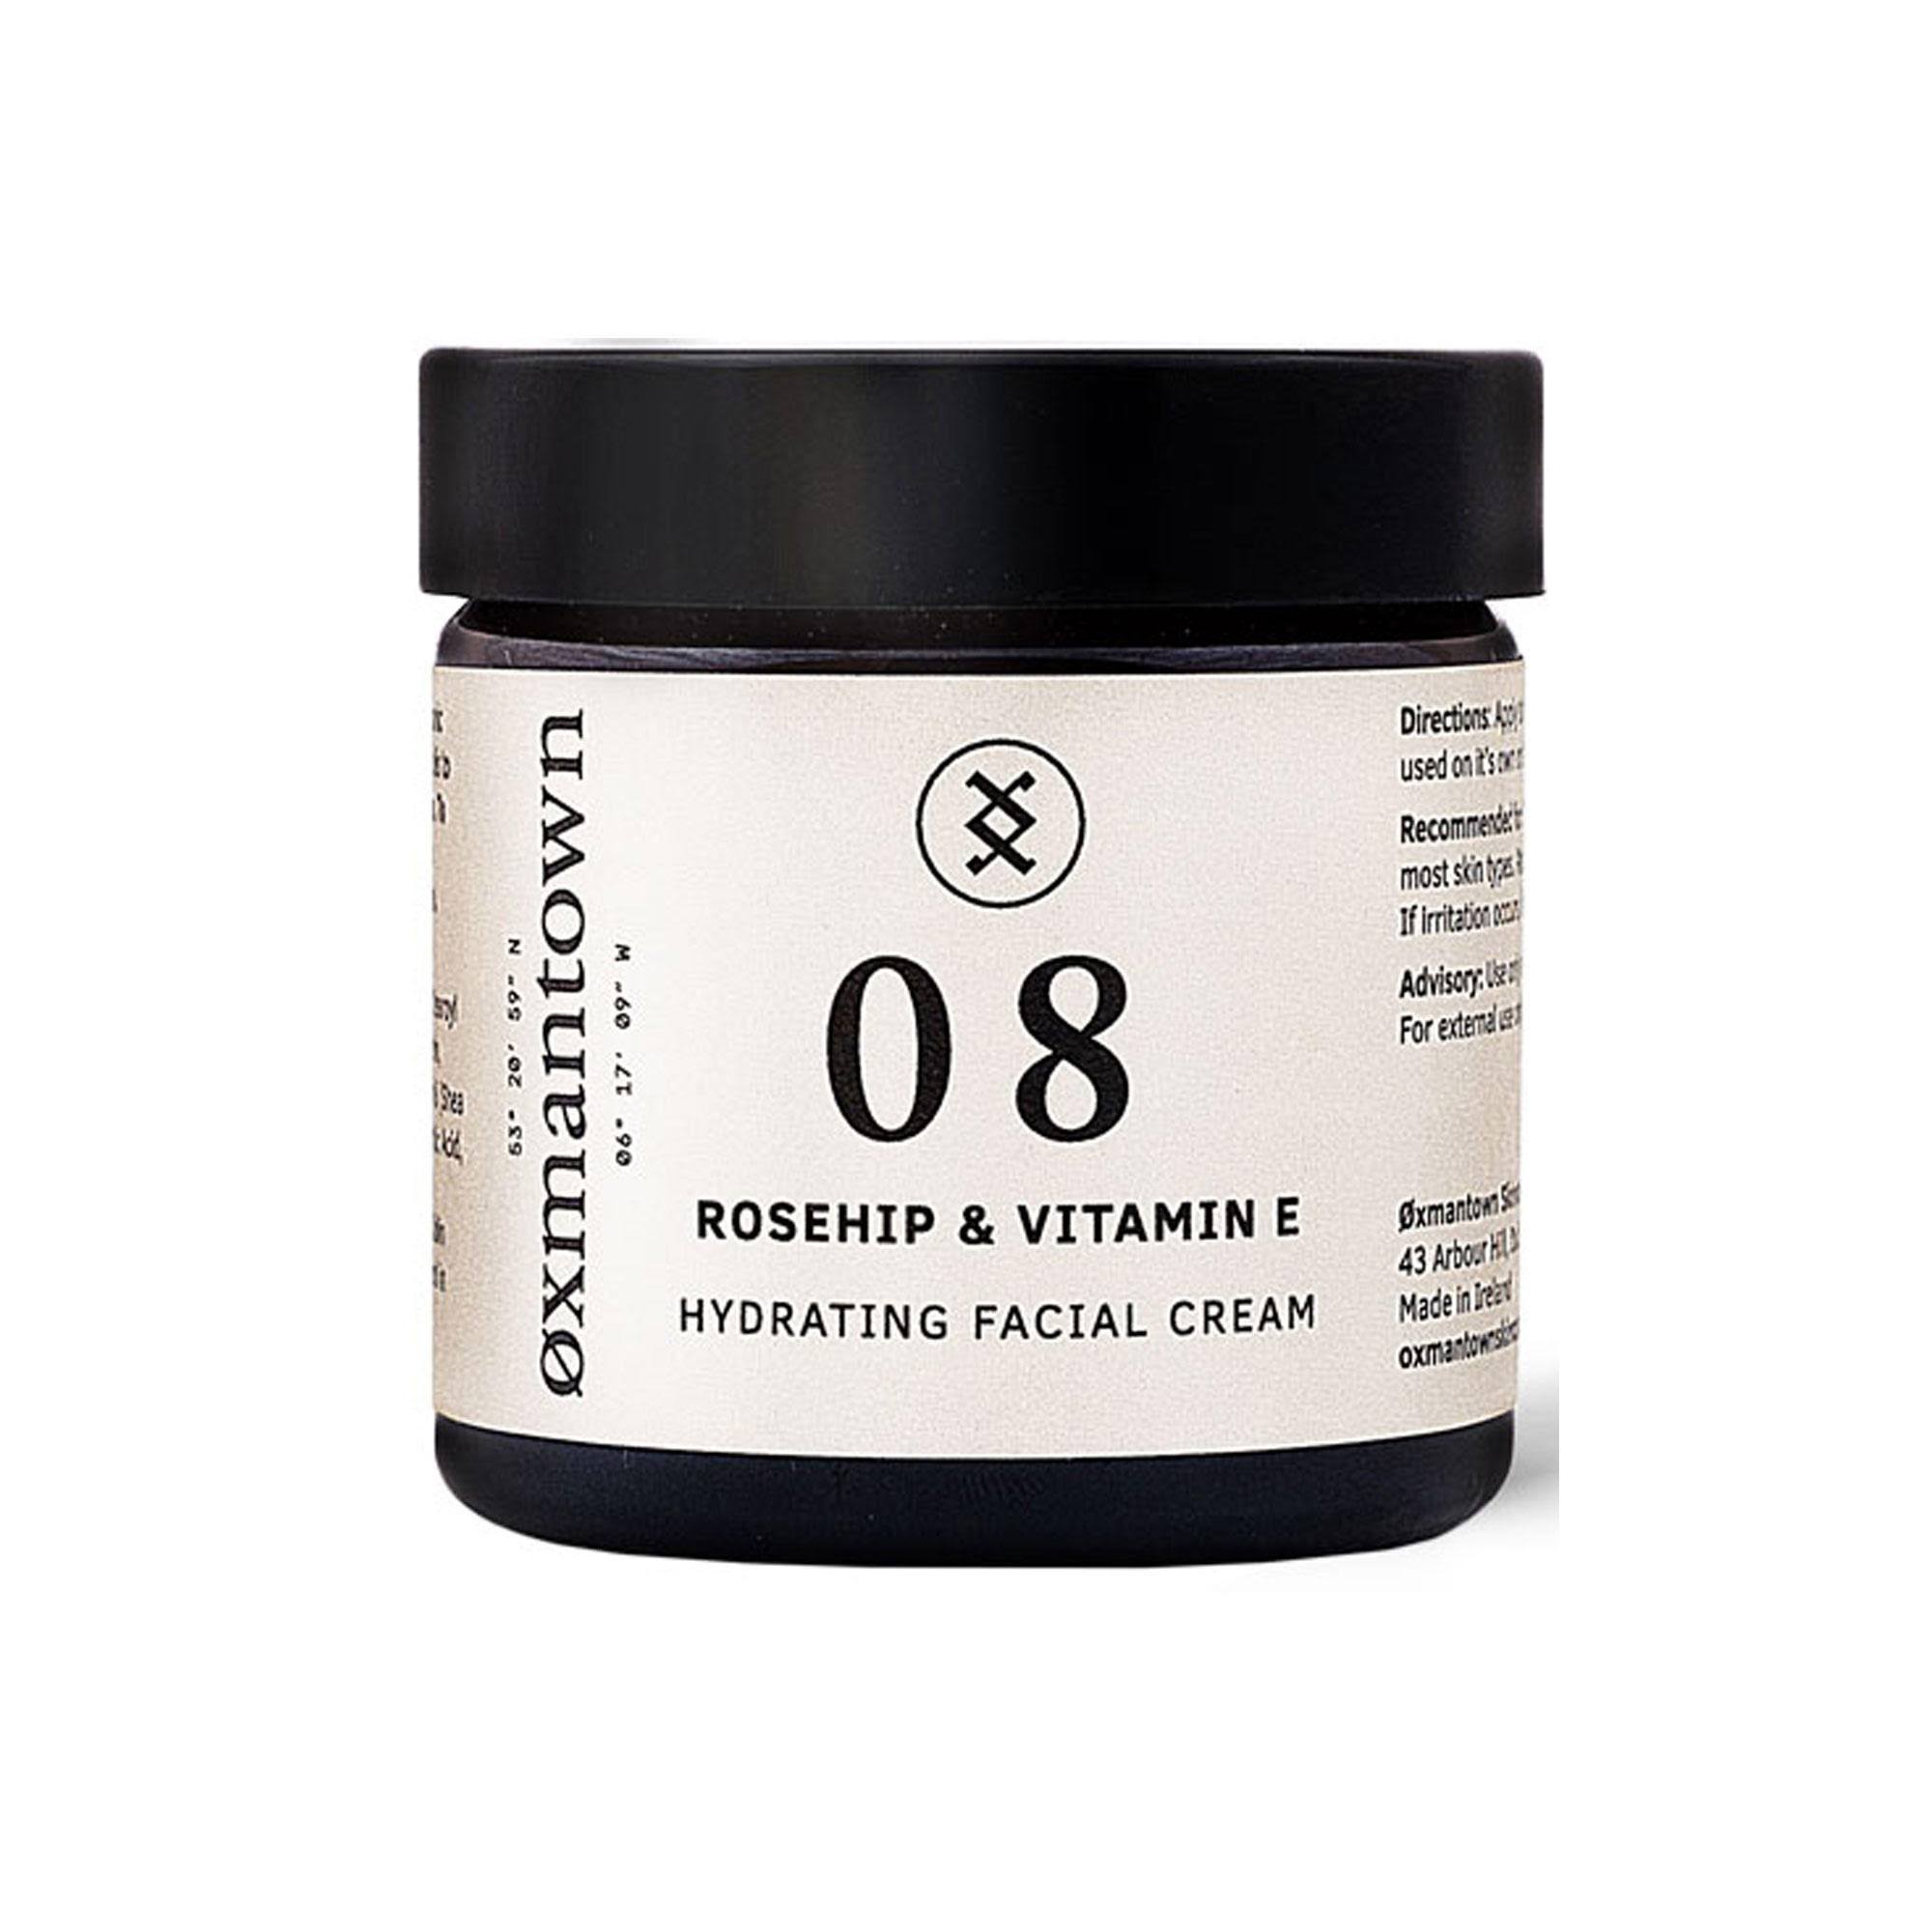 Oxmantown Skincare 08 Rosehip & Vitamin E Hydrating Facial Cream